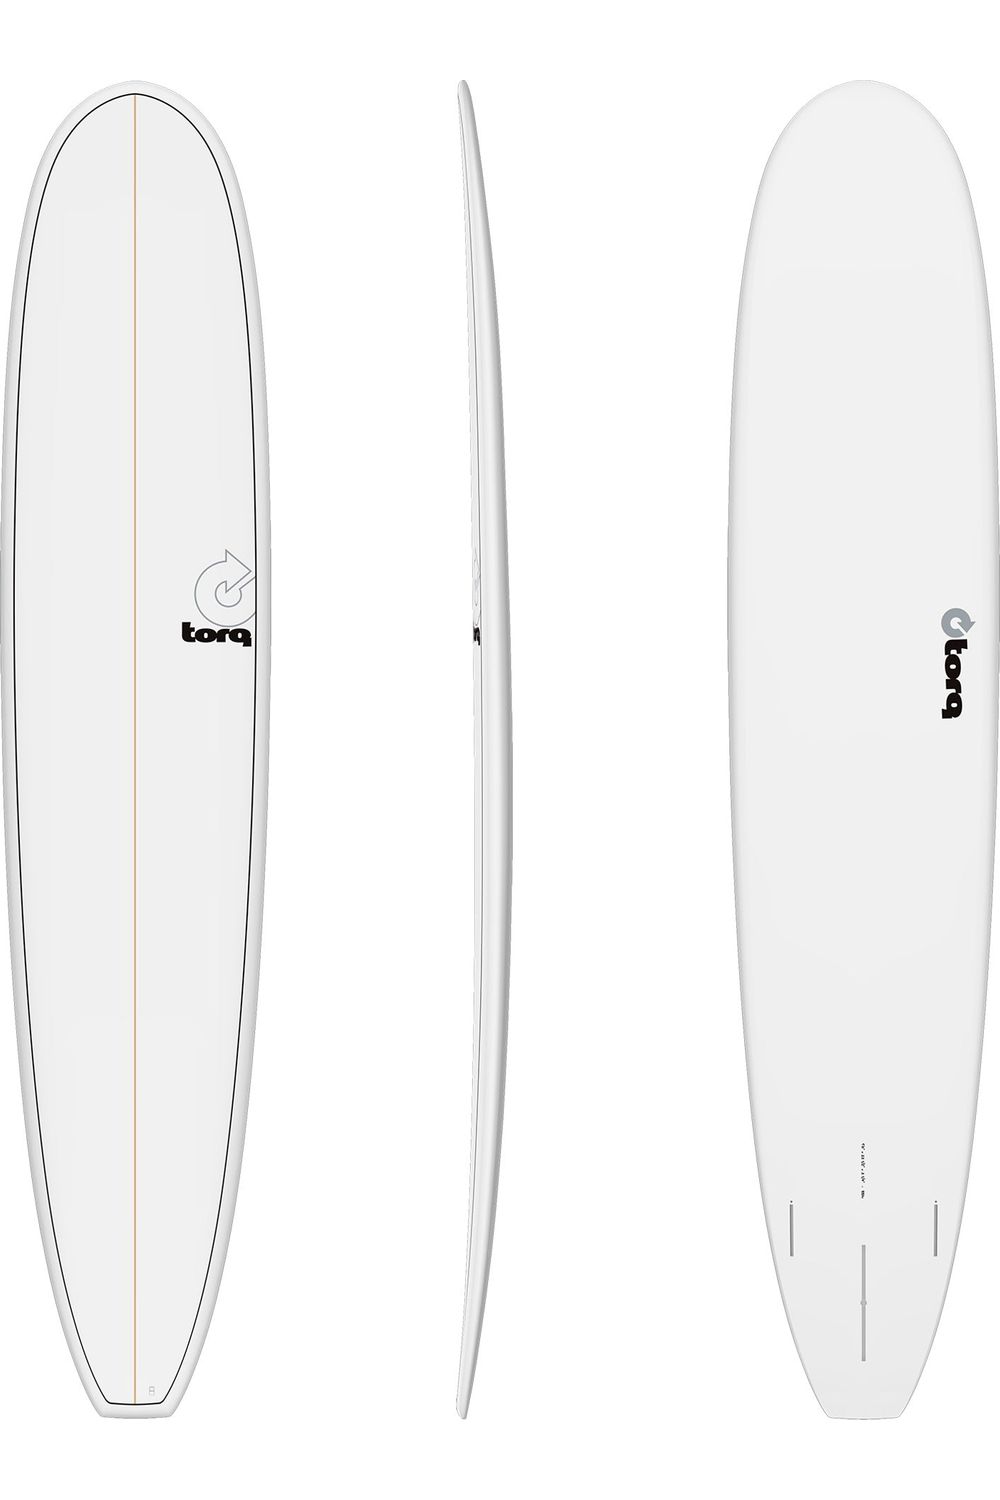 Torq TET Long Surfboard in Pinline White